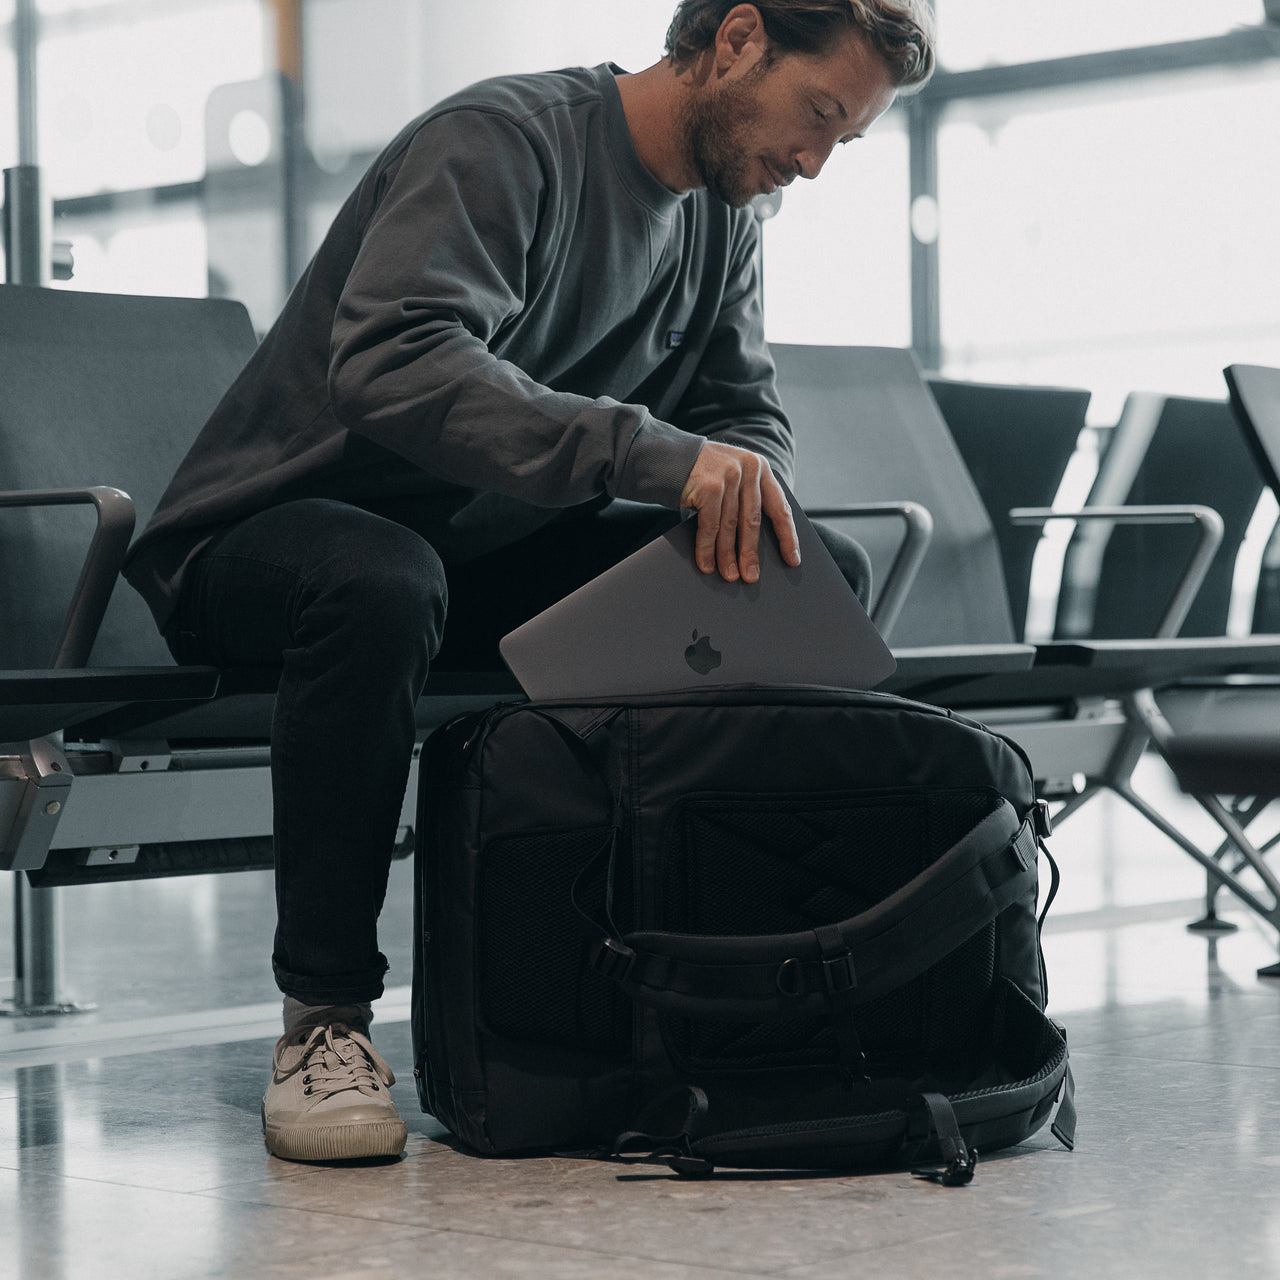 Go Travel Luggage Adventure Bag, Black, One Size